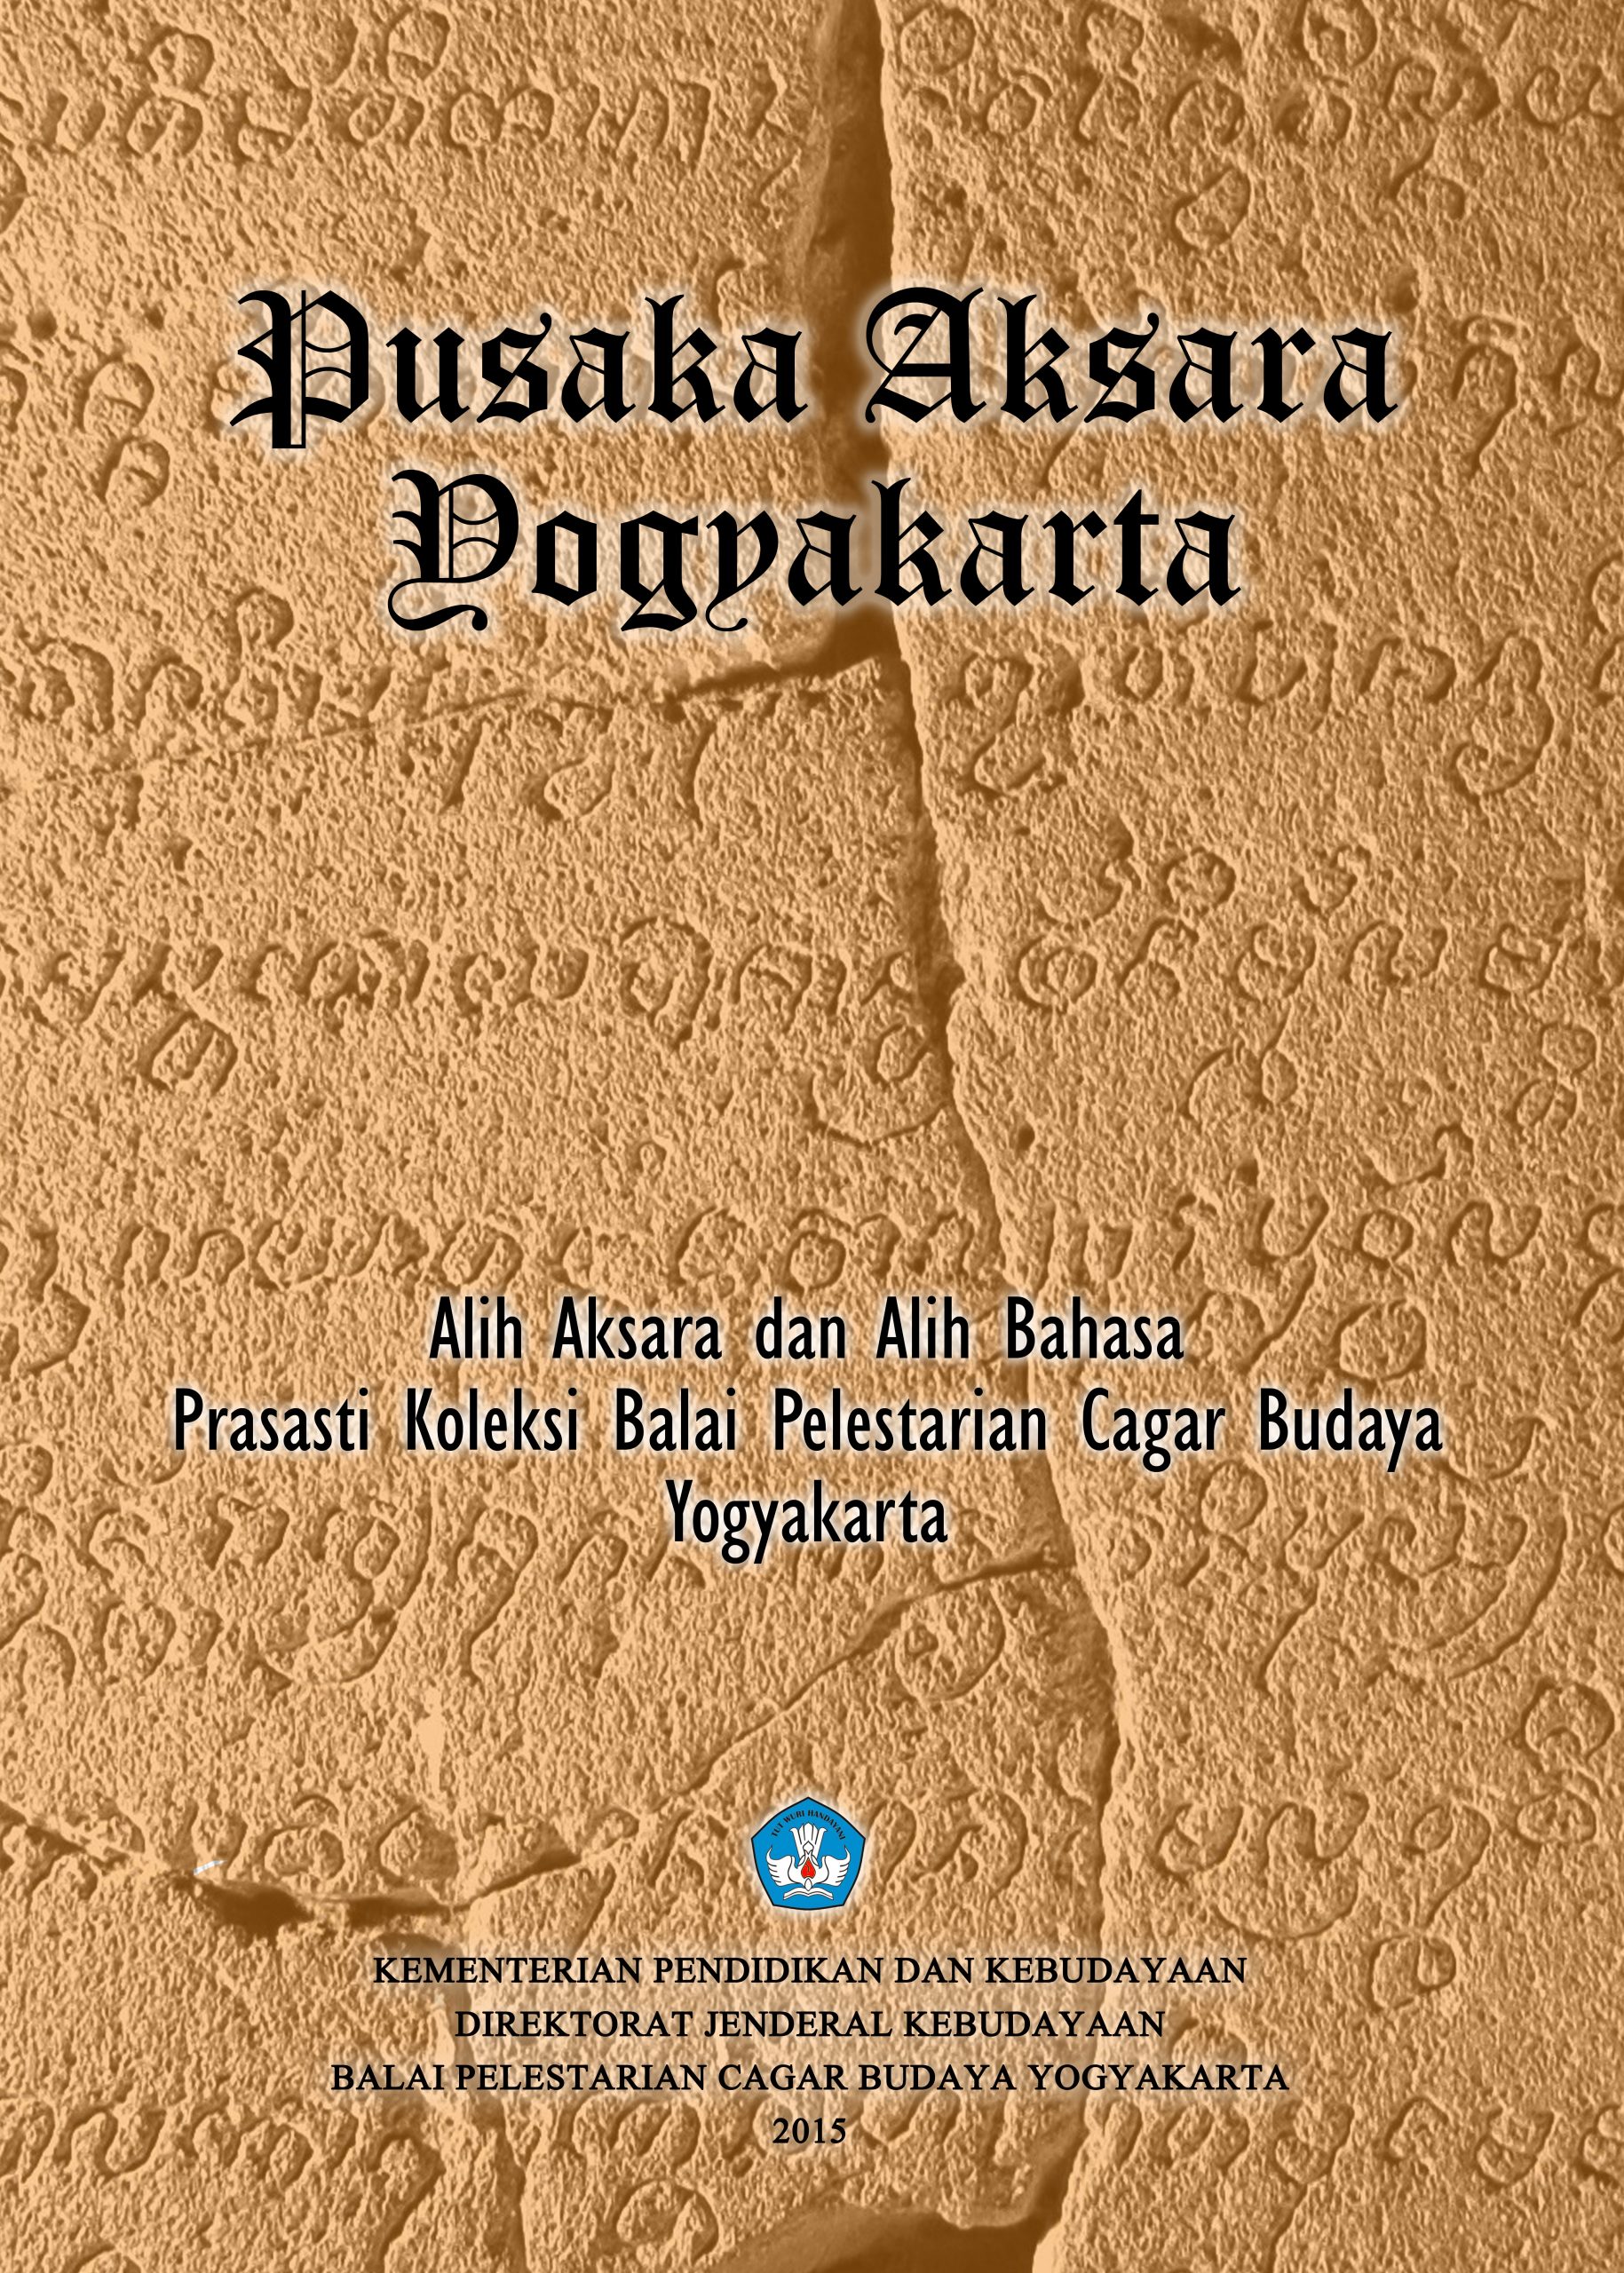 Read more about the article Pusaka Aksara Yogyakarta